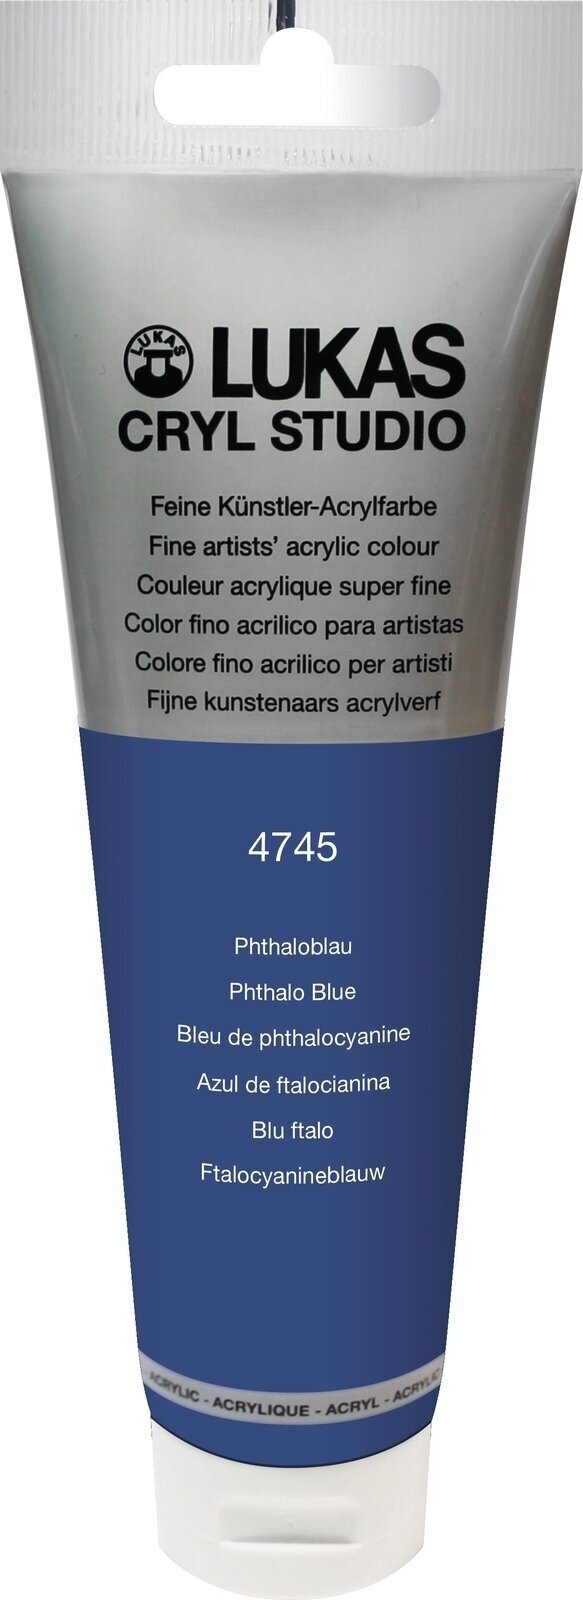 Farba akrylowa Lukas Cryl Studio Acrylic Paint Plastic Tube Farba akrylowa Phthalo Blue 125 ml 1 szt